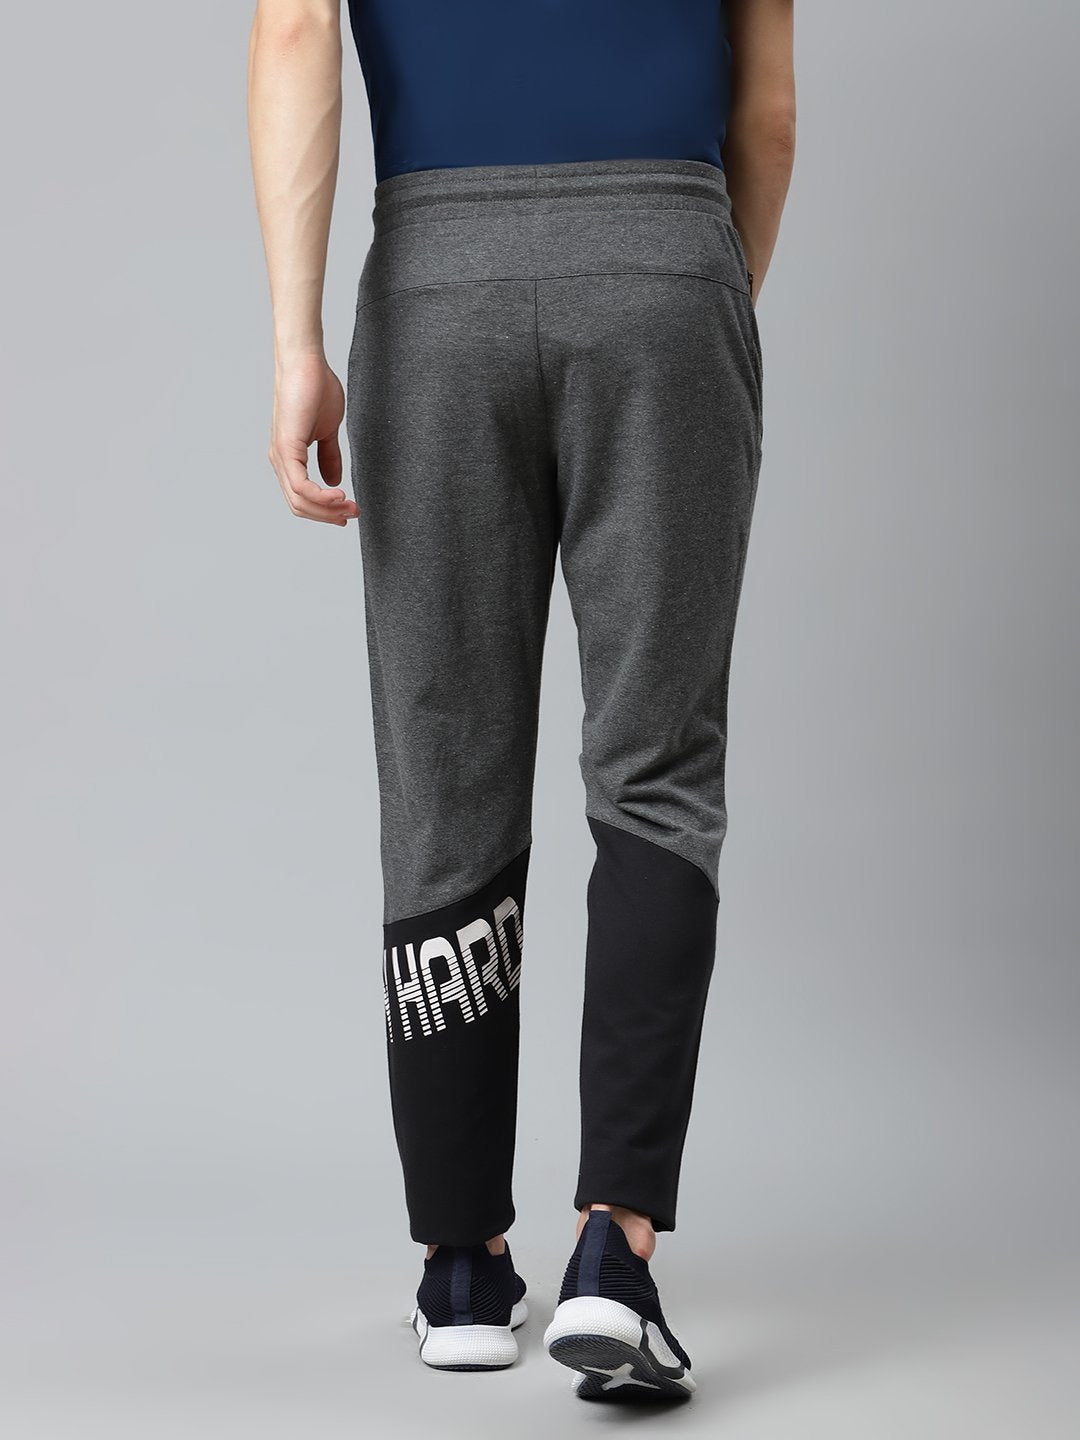 Alcis Men Charcoal Grey & Black Slim Fit Colourblocked Track Pants